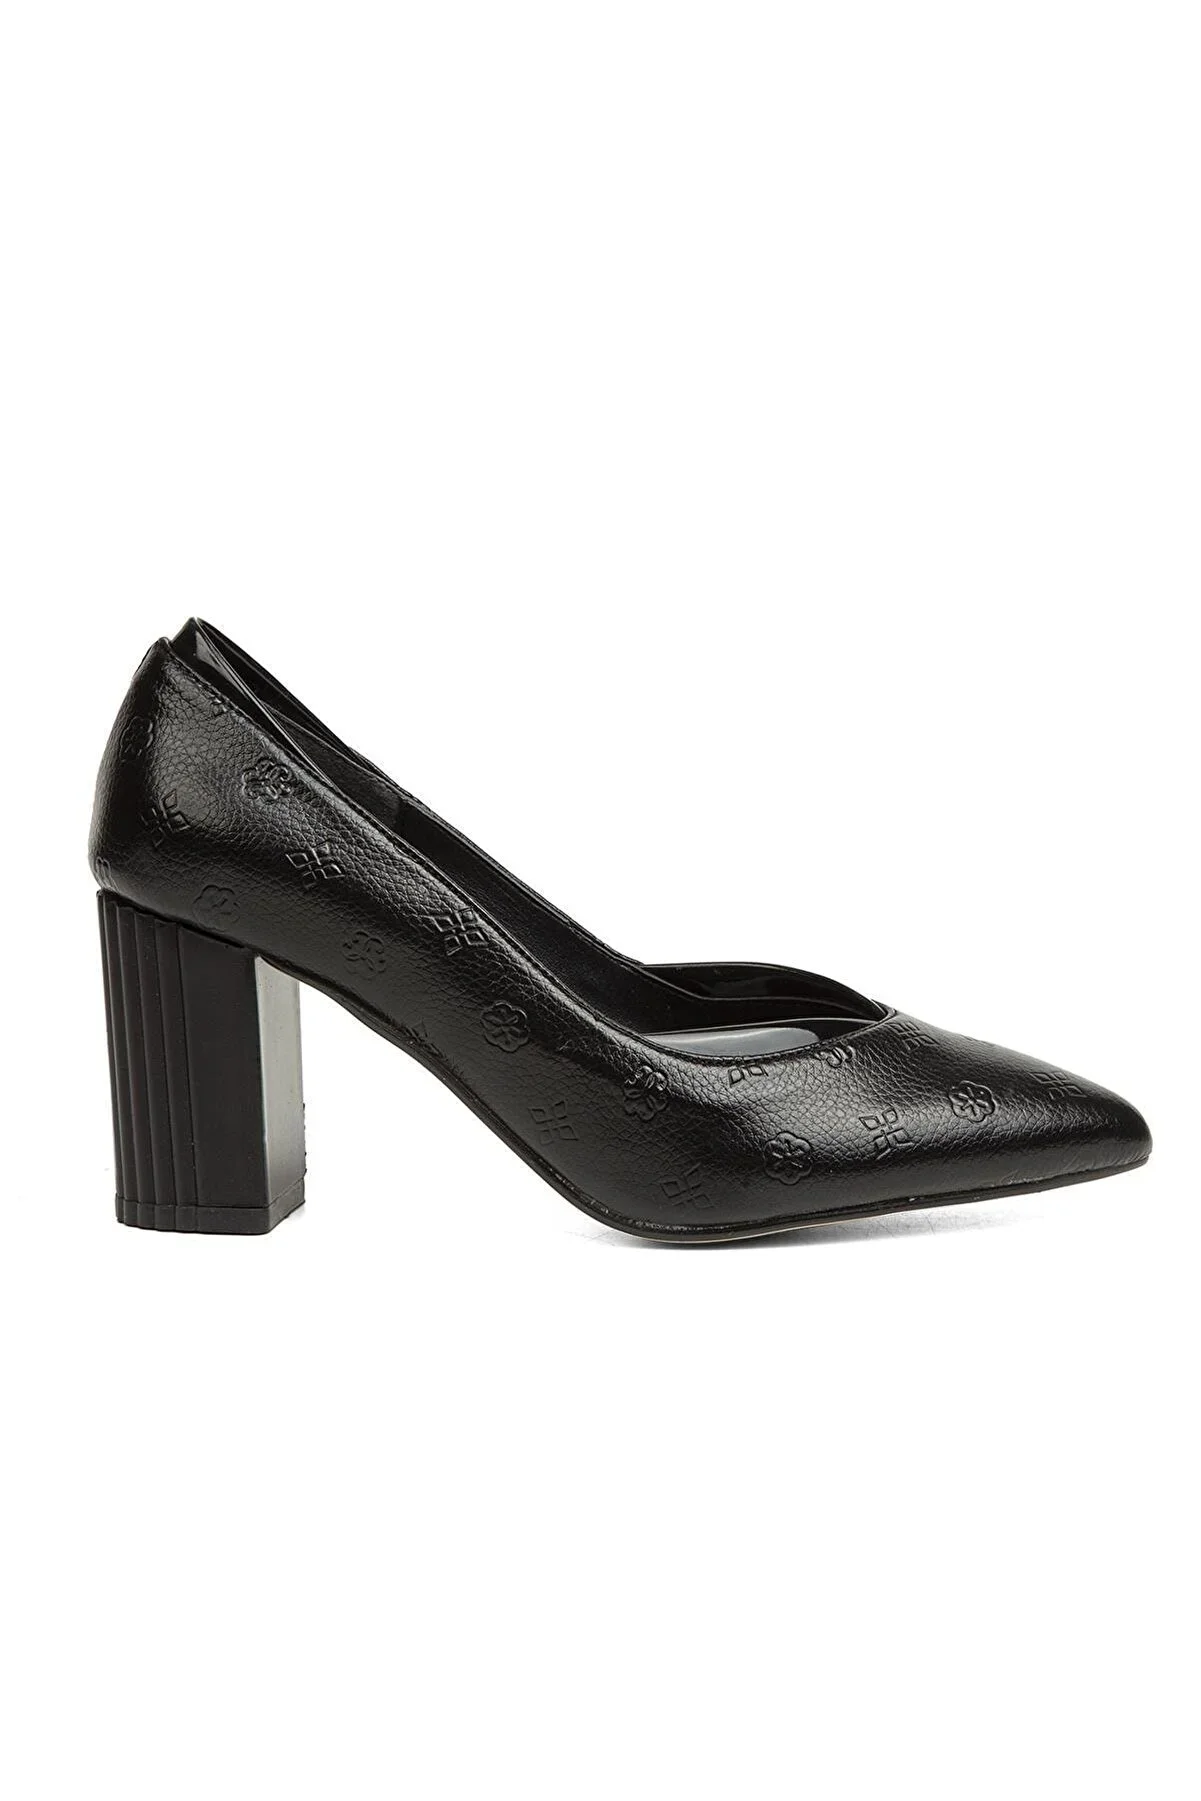 Kadın Topuklu Ayakkabı PC-51199-Siyah - 2